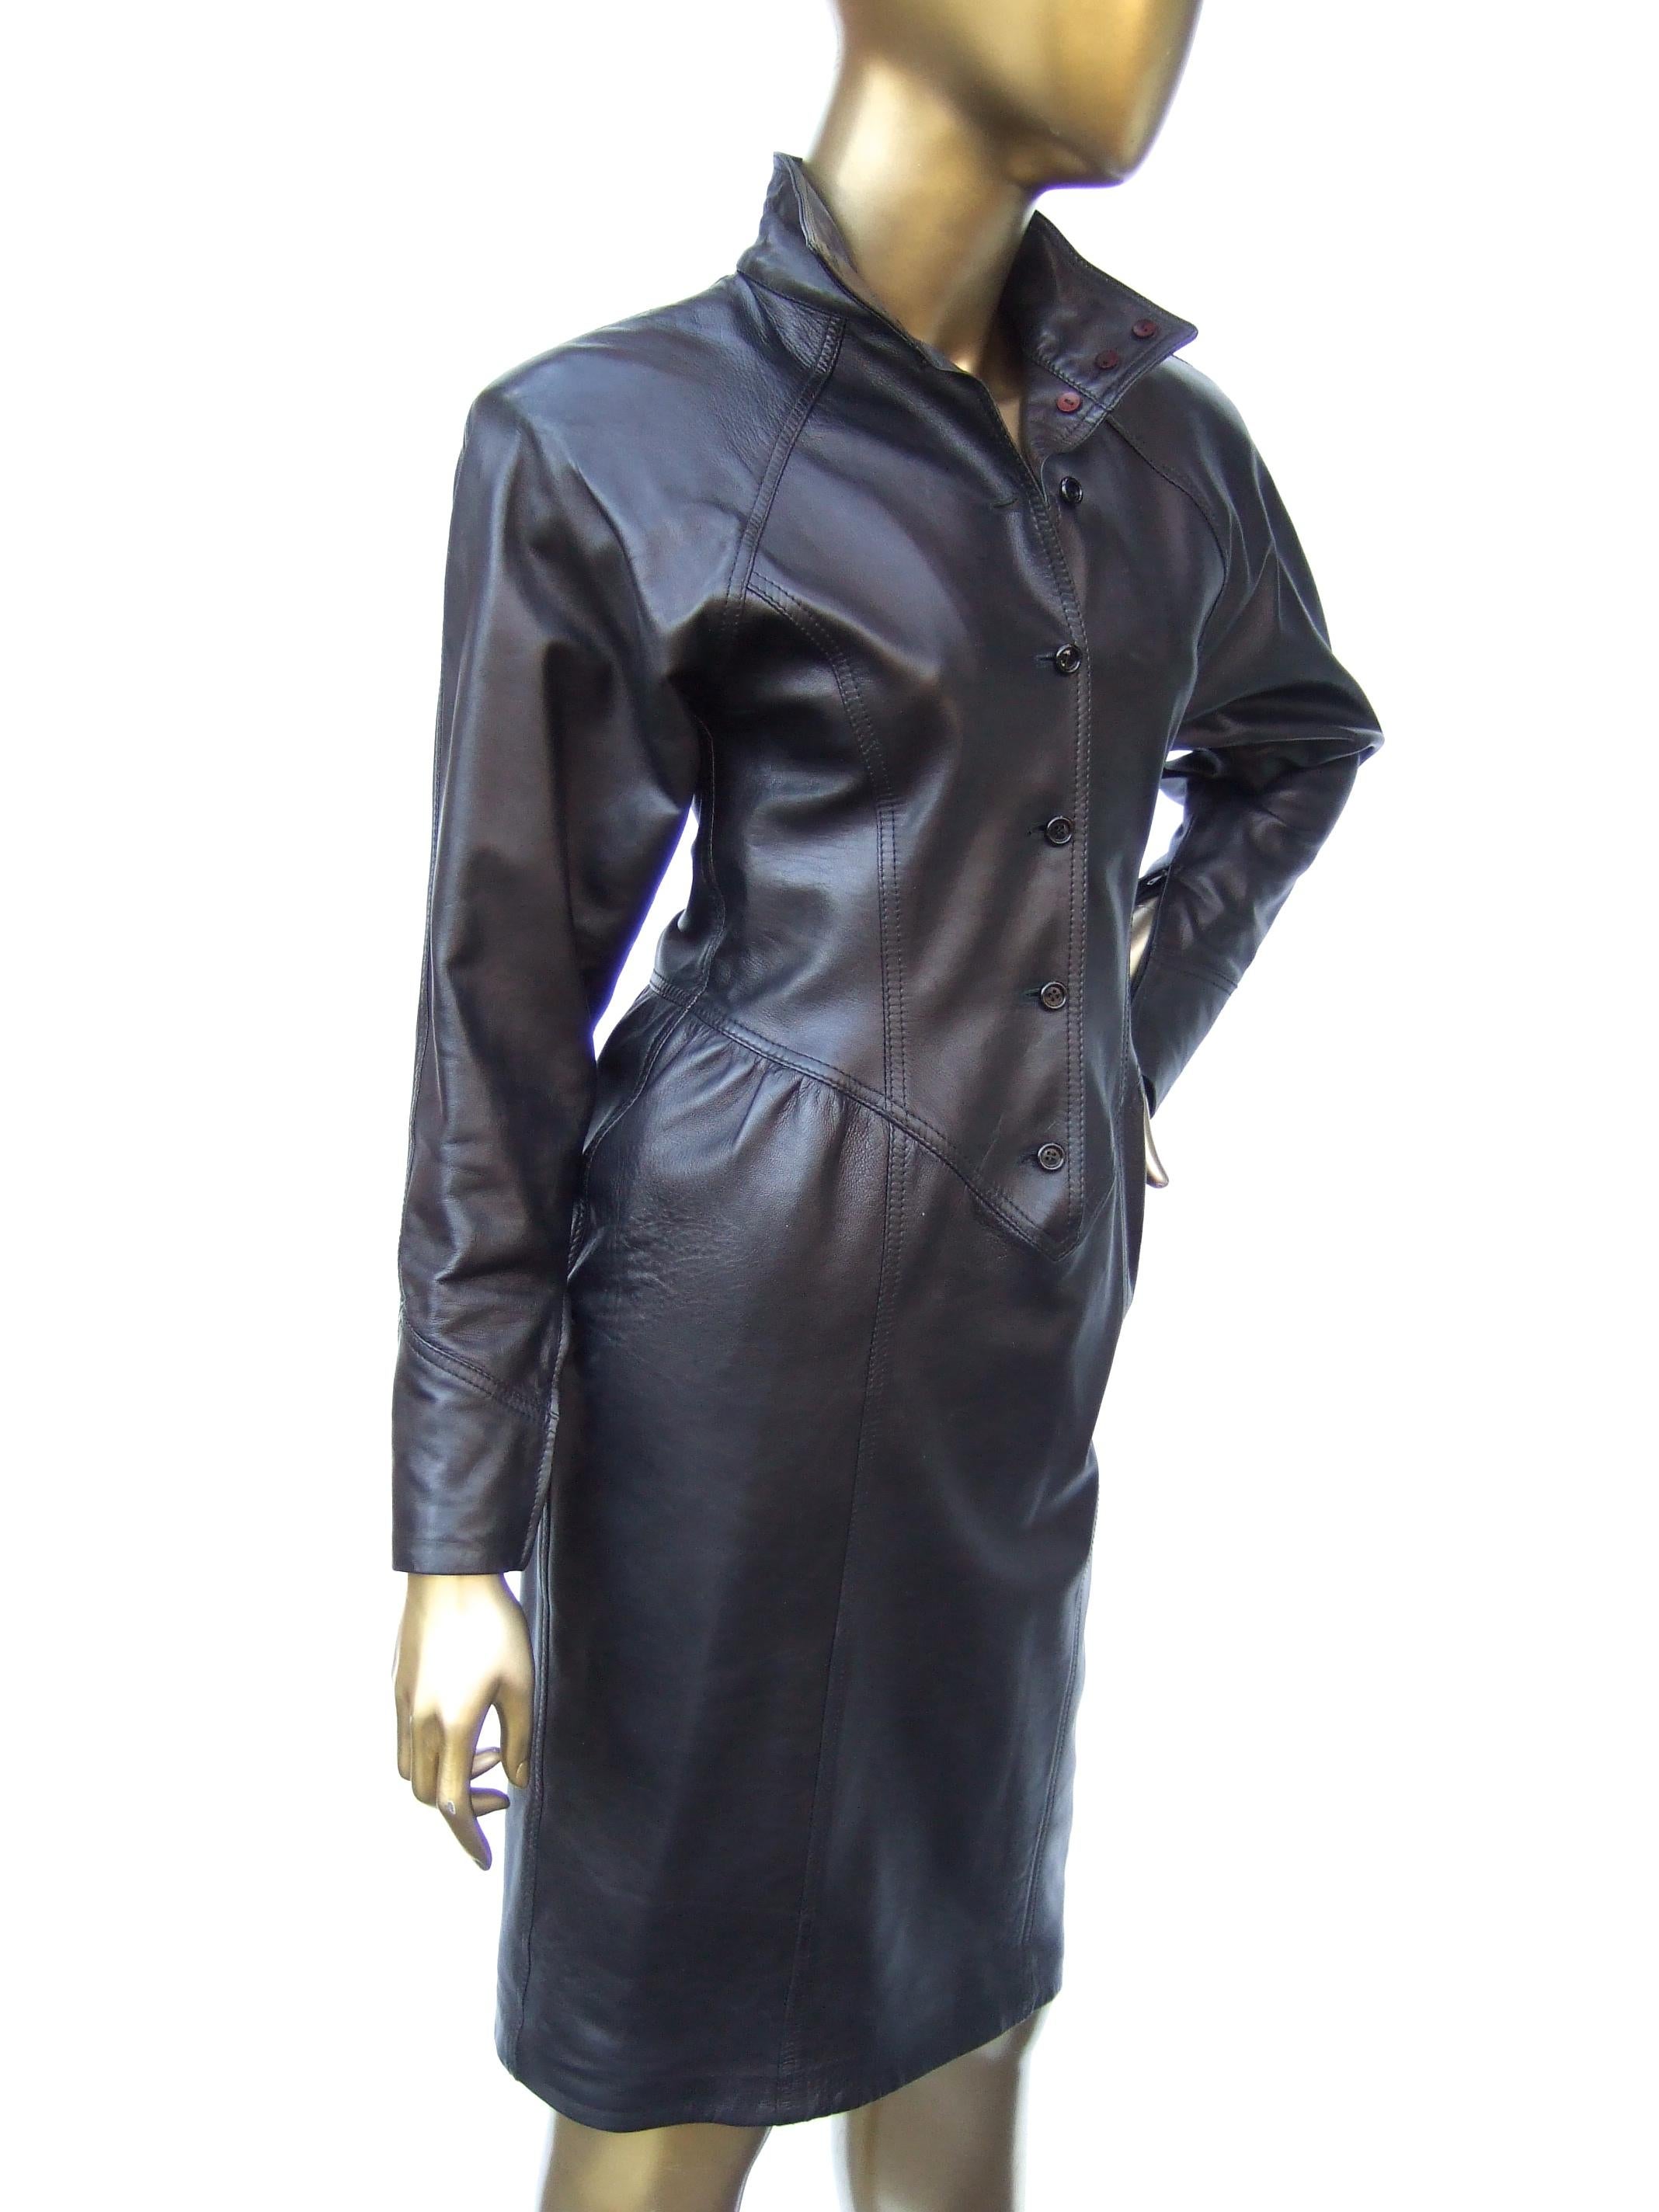 Emanuel Ungaro Paris Avant Garde Edgy Brown Leather Dress Made in Italy c 1980s en vente 13